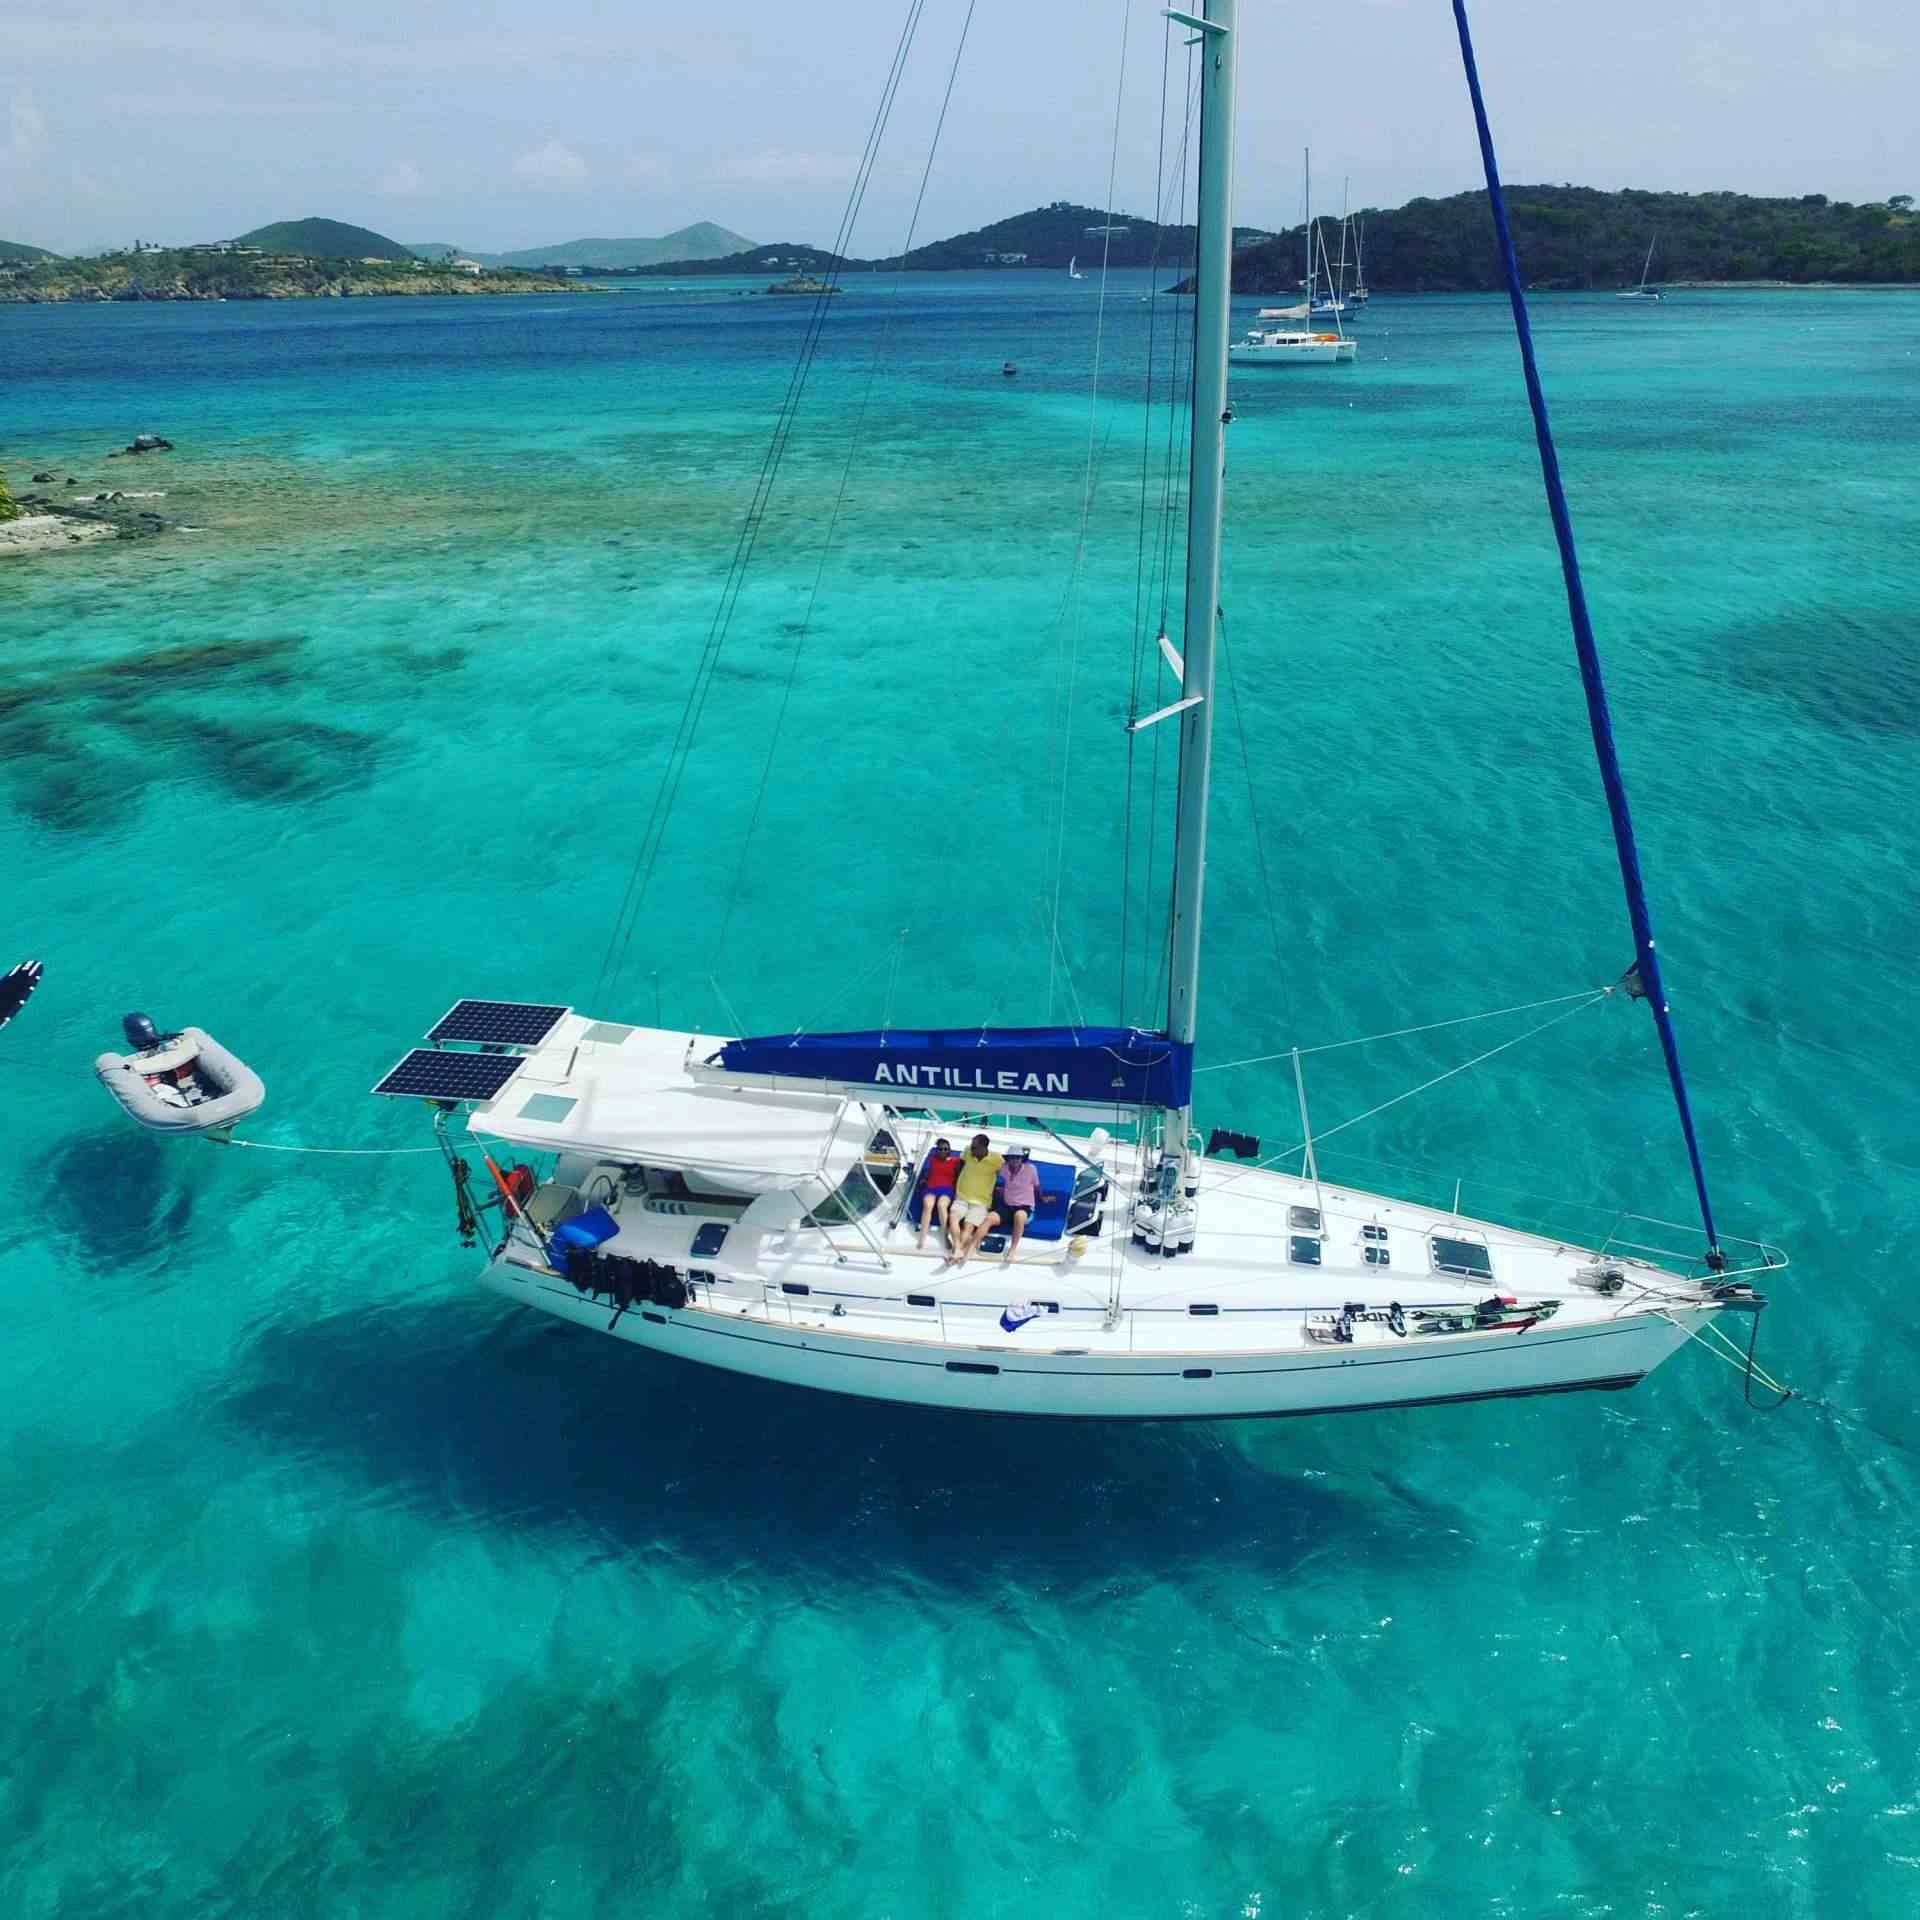 antillean - Sailboat Charter British Virgin Islands & Boat hire in Caribbean Virgin Islands 1